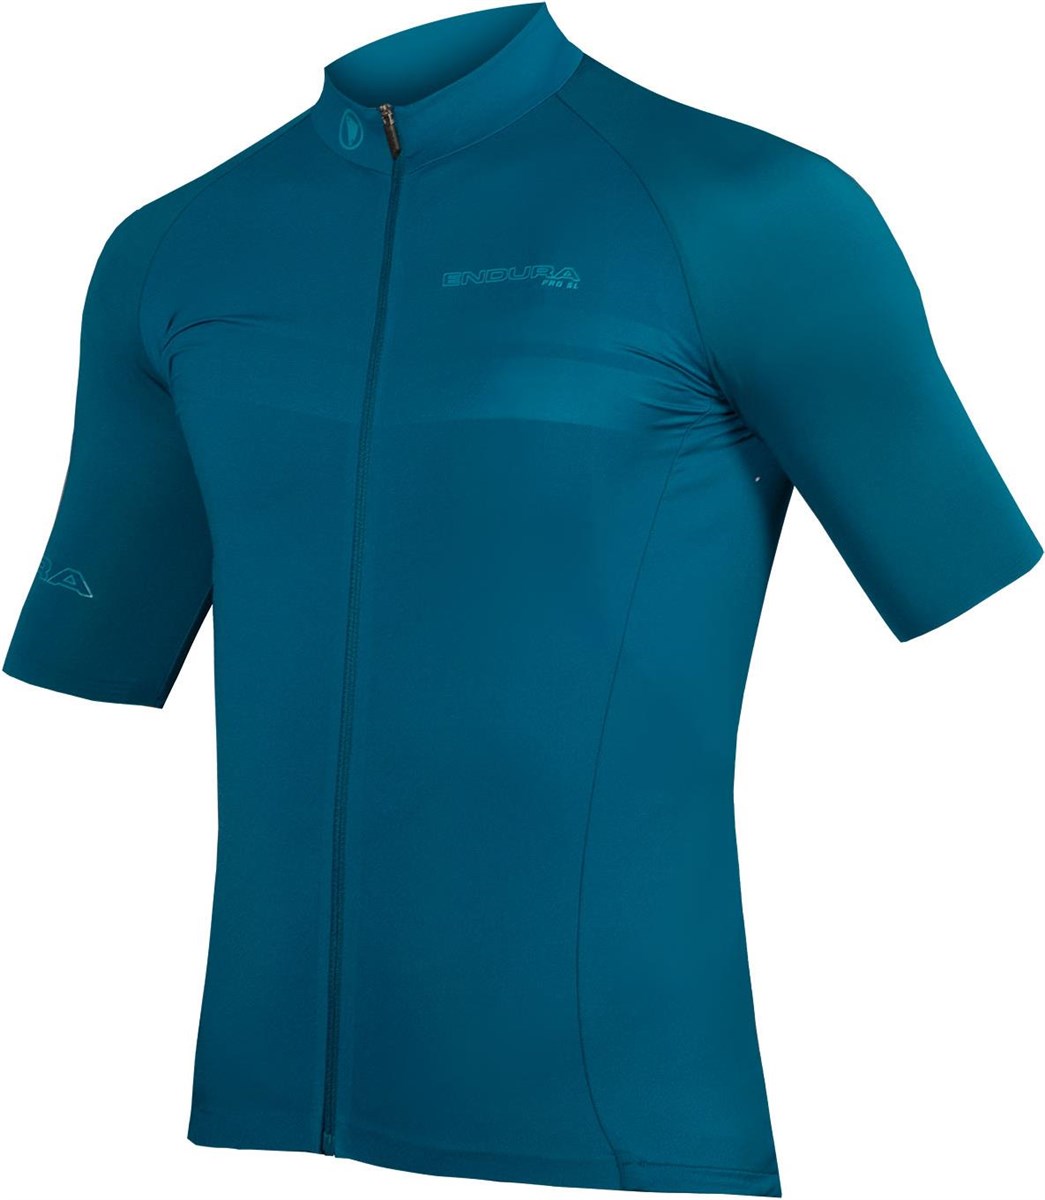 Endura Pro SL Short Sleeve Cycling Jersey II product image